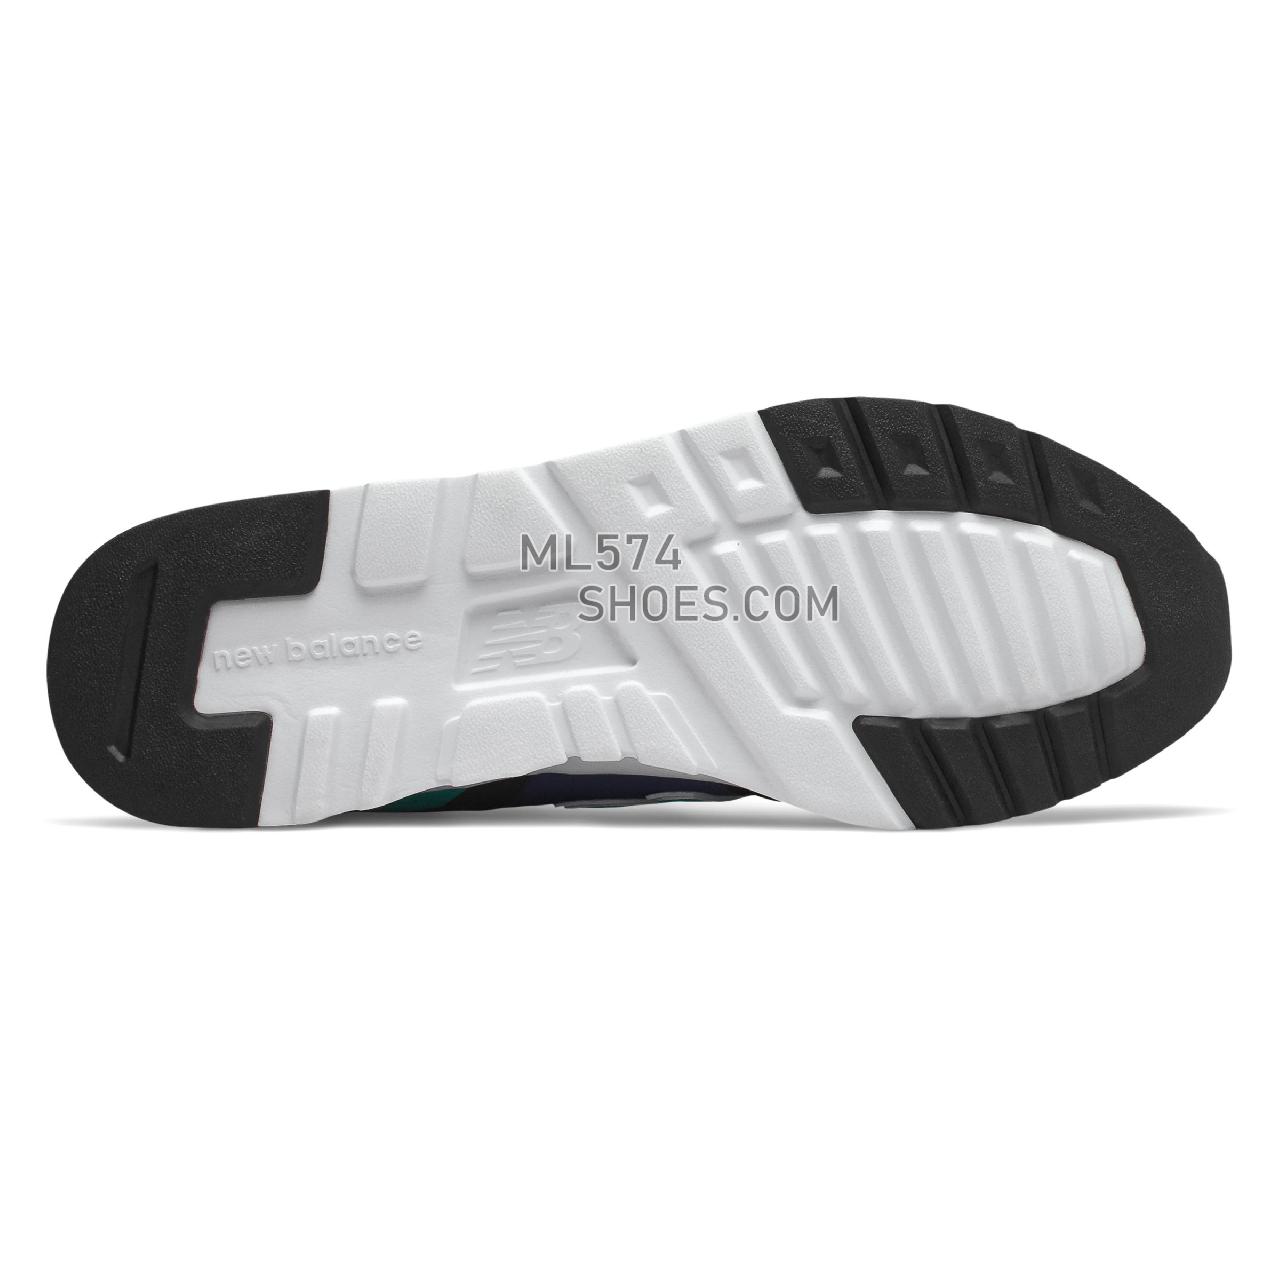 New Balance 997H - Men's Classic Sneakers - Black with Verdite - CM997HZK